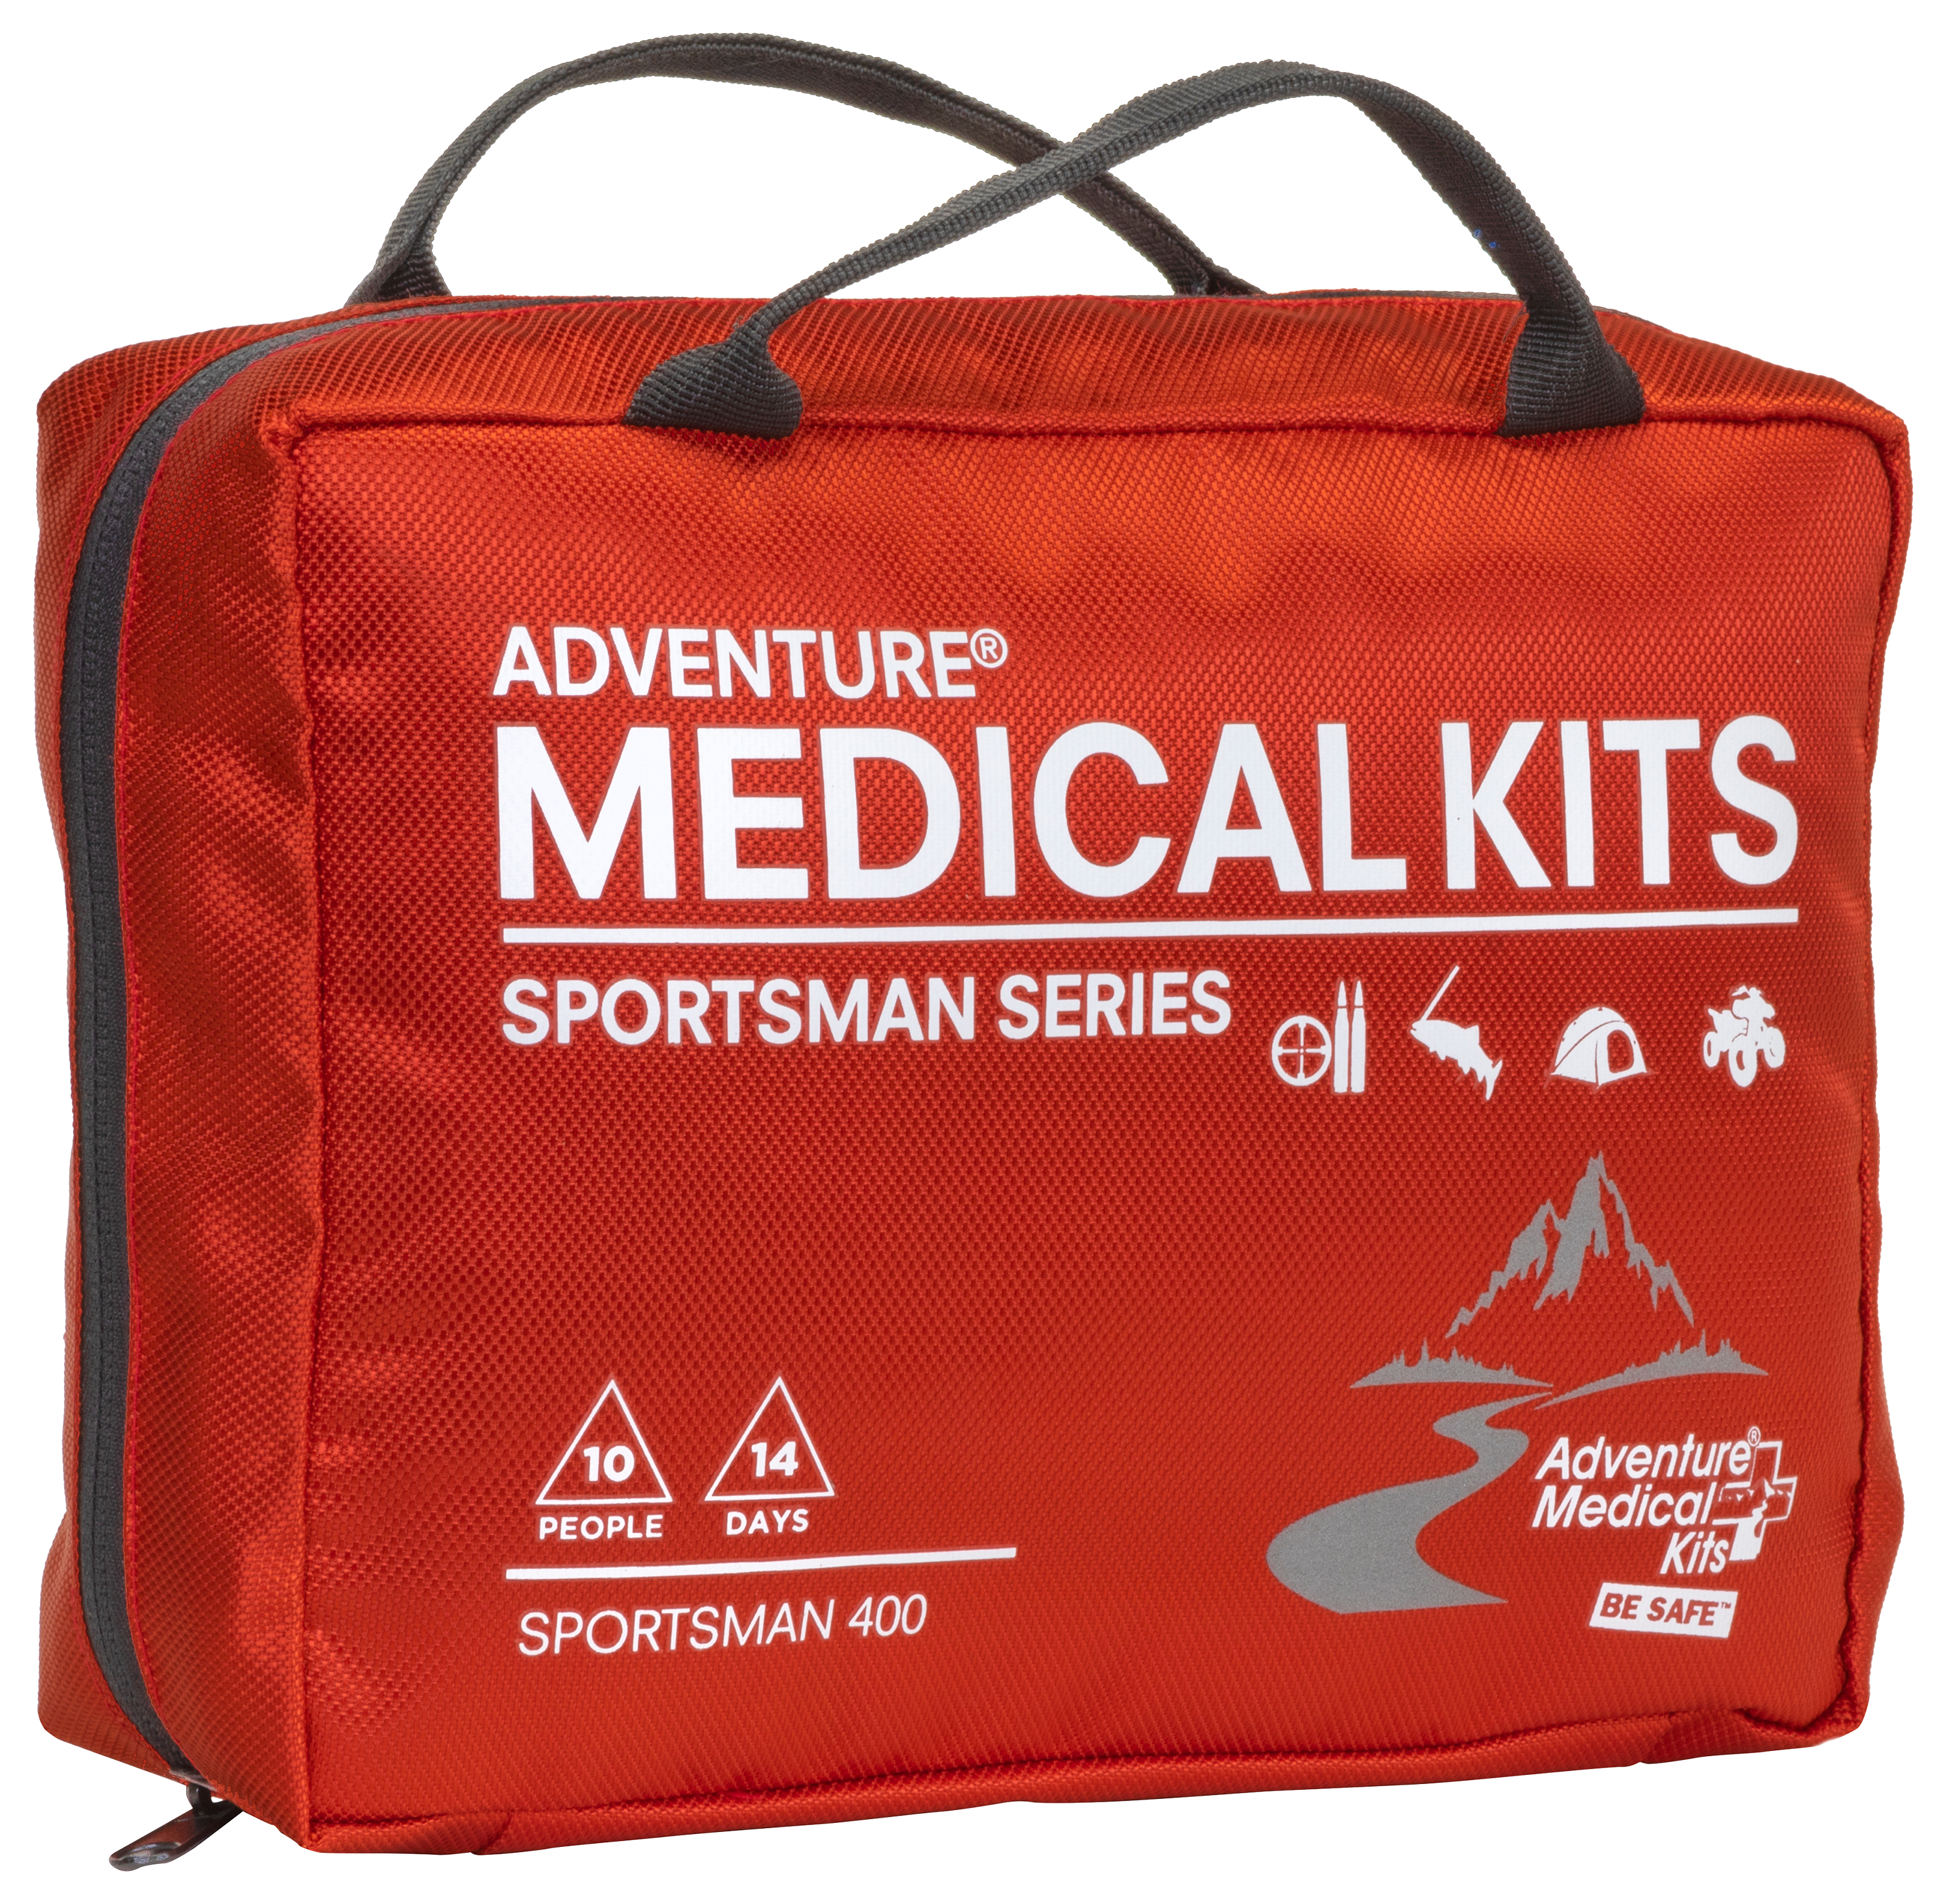 Outdoor Portable First Aid Kit Wild Seeking Life-saving Medical Kit Car  Home Travel Emergency Kit Medical Kit First-aid Storage